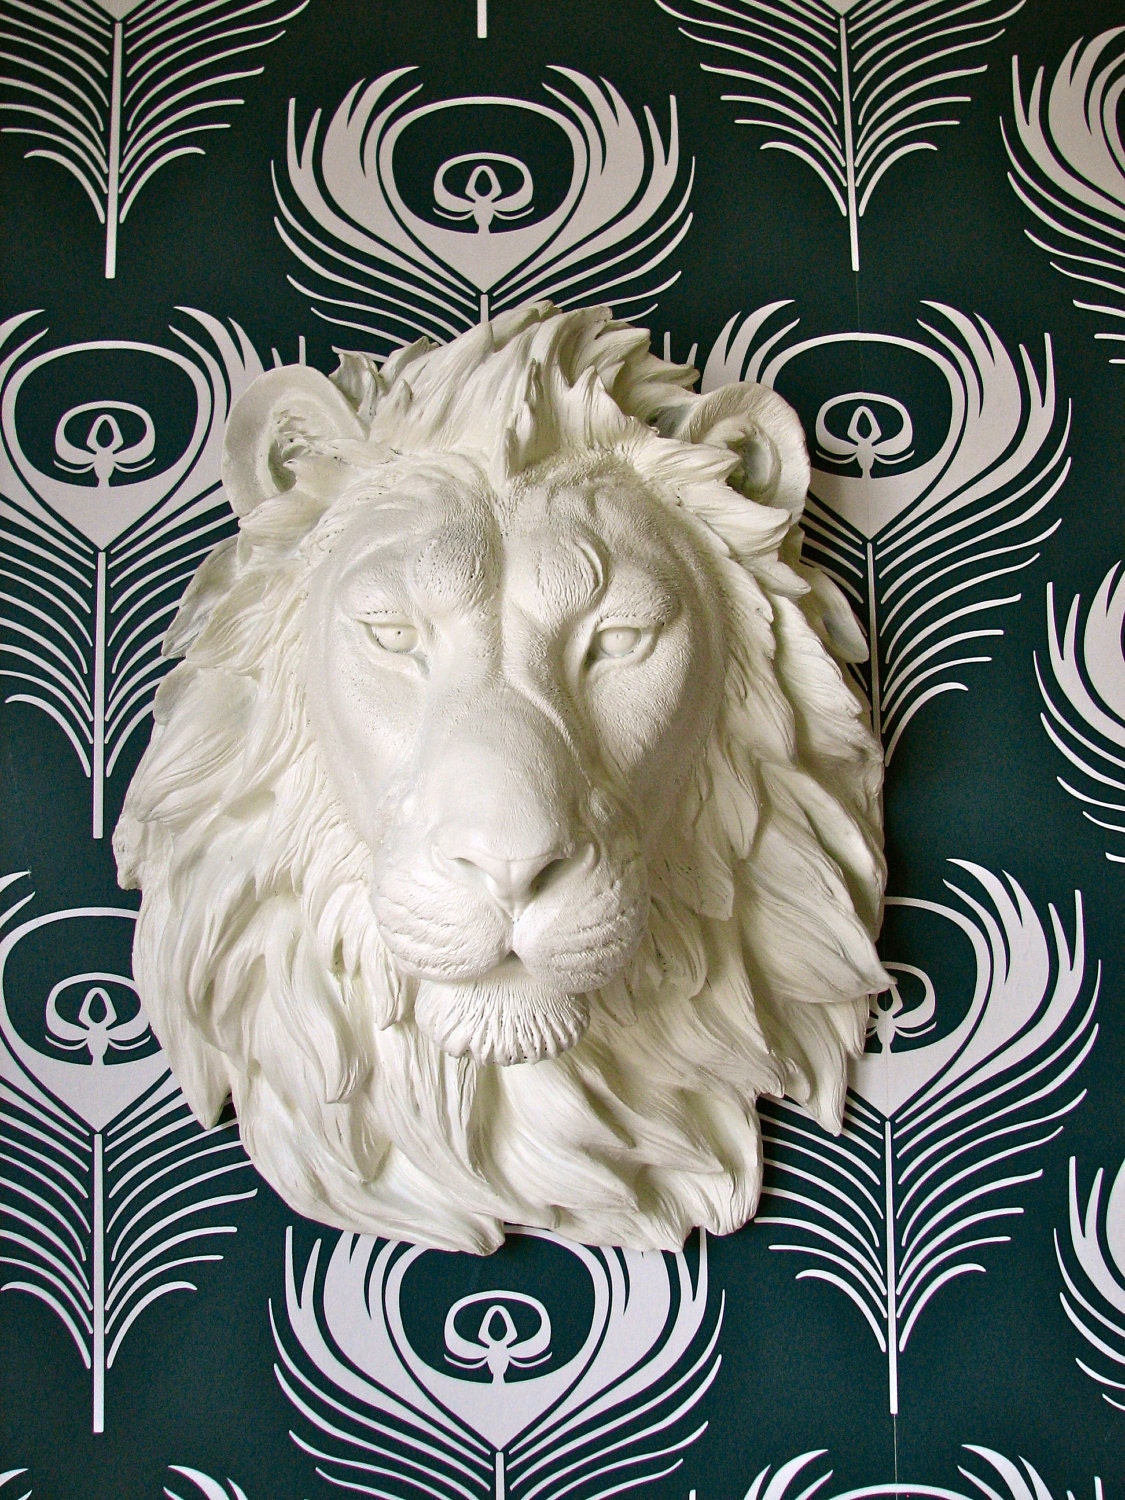 Lion Head Faux Taxidermy Wall Decor: Leonard the Lion